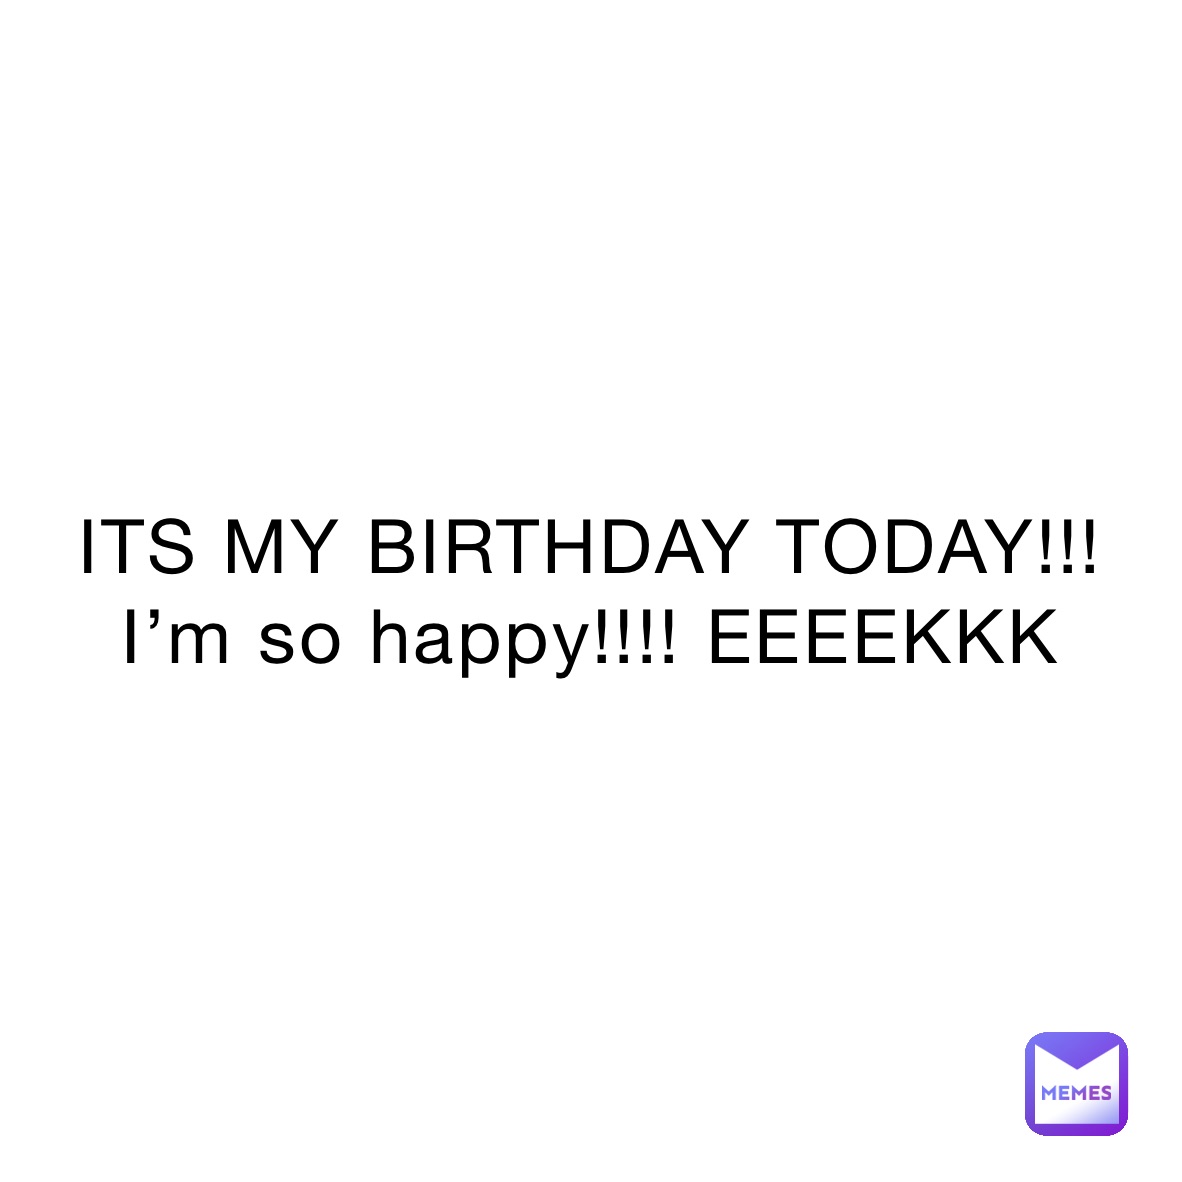 ITS MY BIRTHDAY TODAY!!!
I’m so happy!!!! EEEEKKK